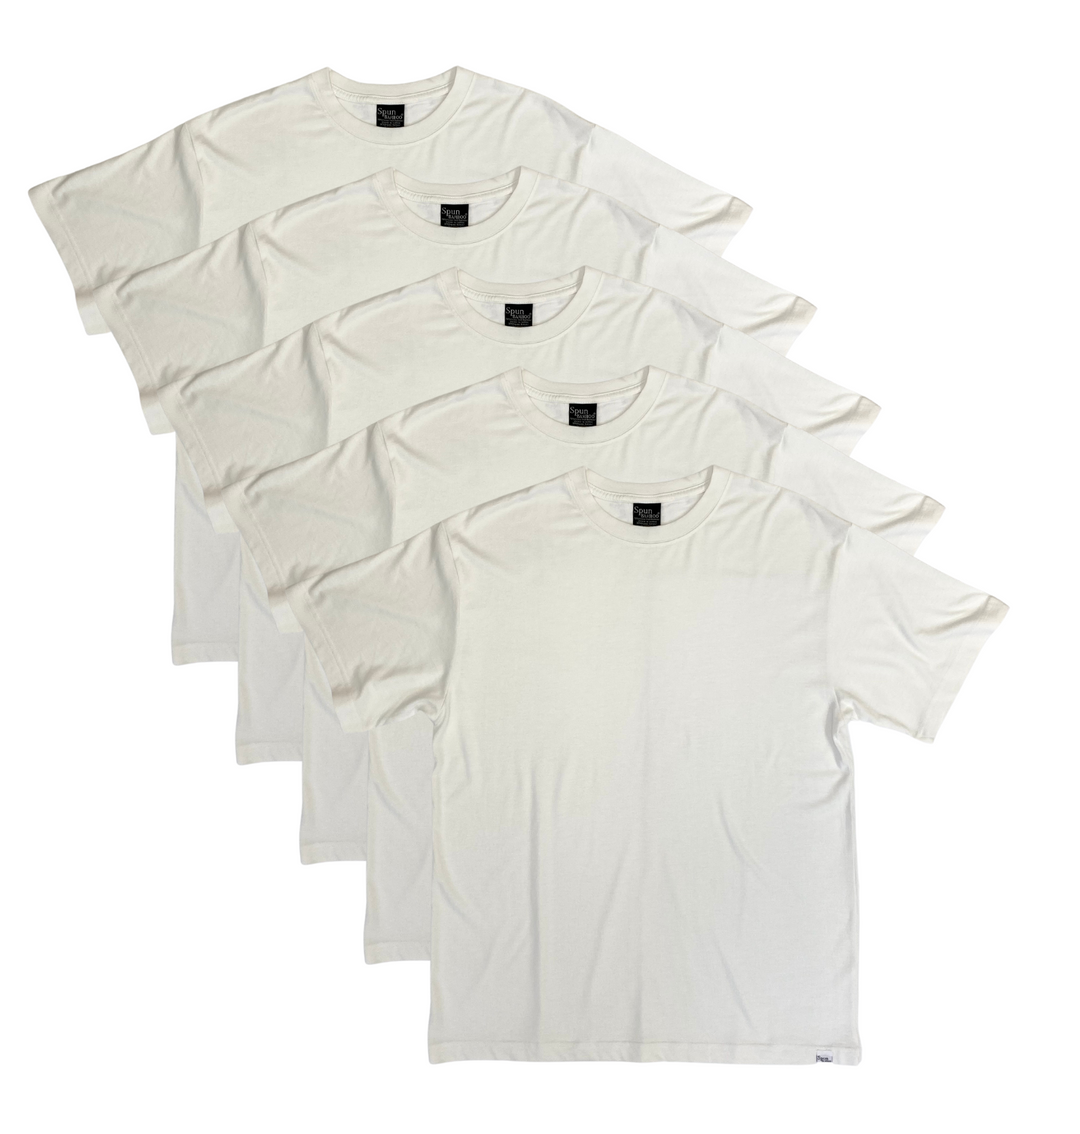 Men's Bamboo Viscose/Organic Cotton Short Sleeve T-Shirt White Color - 5-Pack